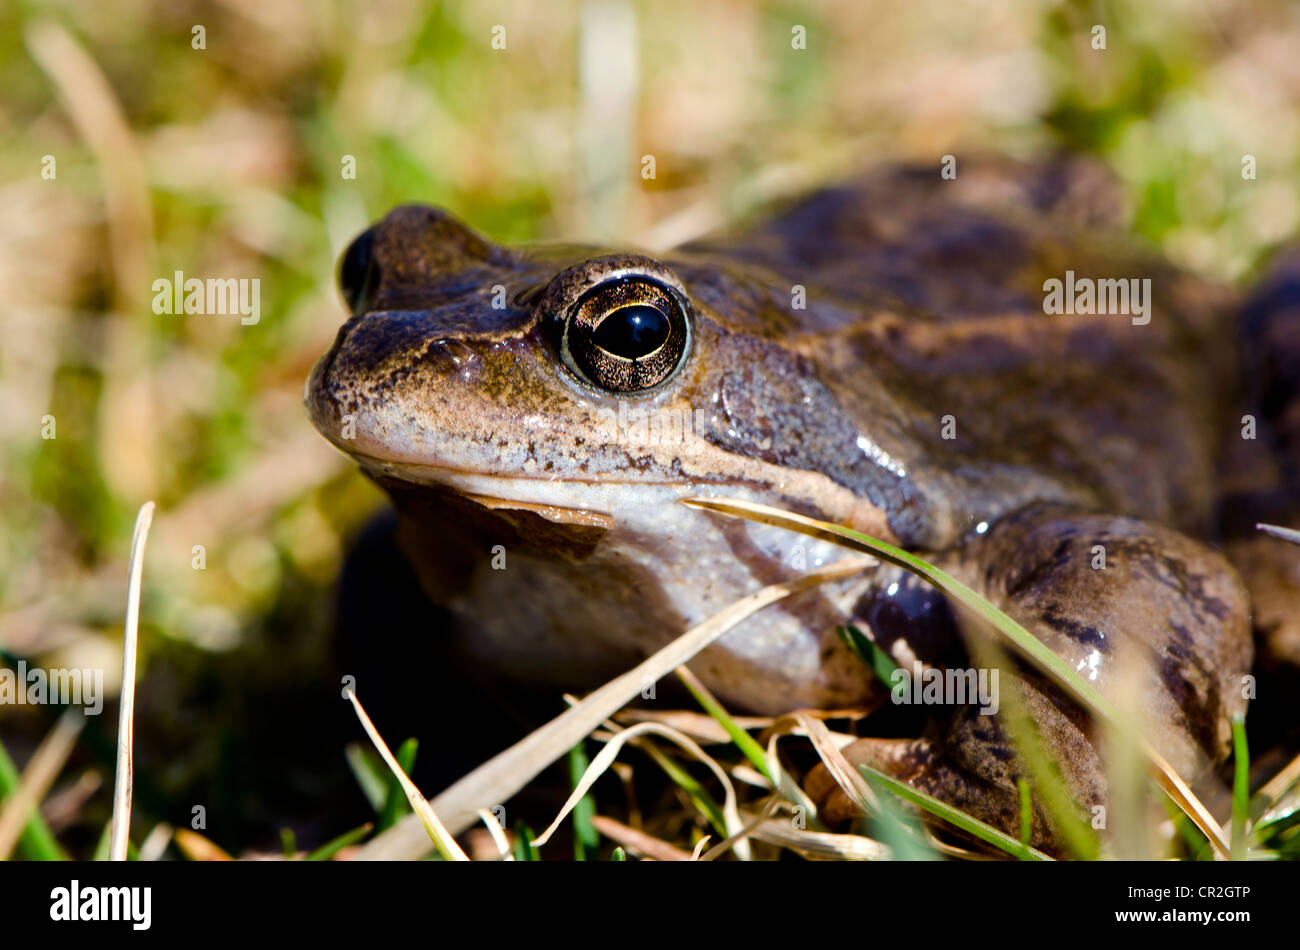 Frosch Auge Makro Nahaufnahme nasse Amphibien Tier zwischen Rasen. Stockfoto